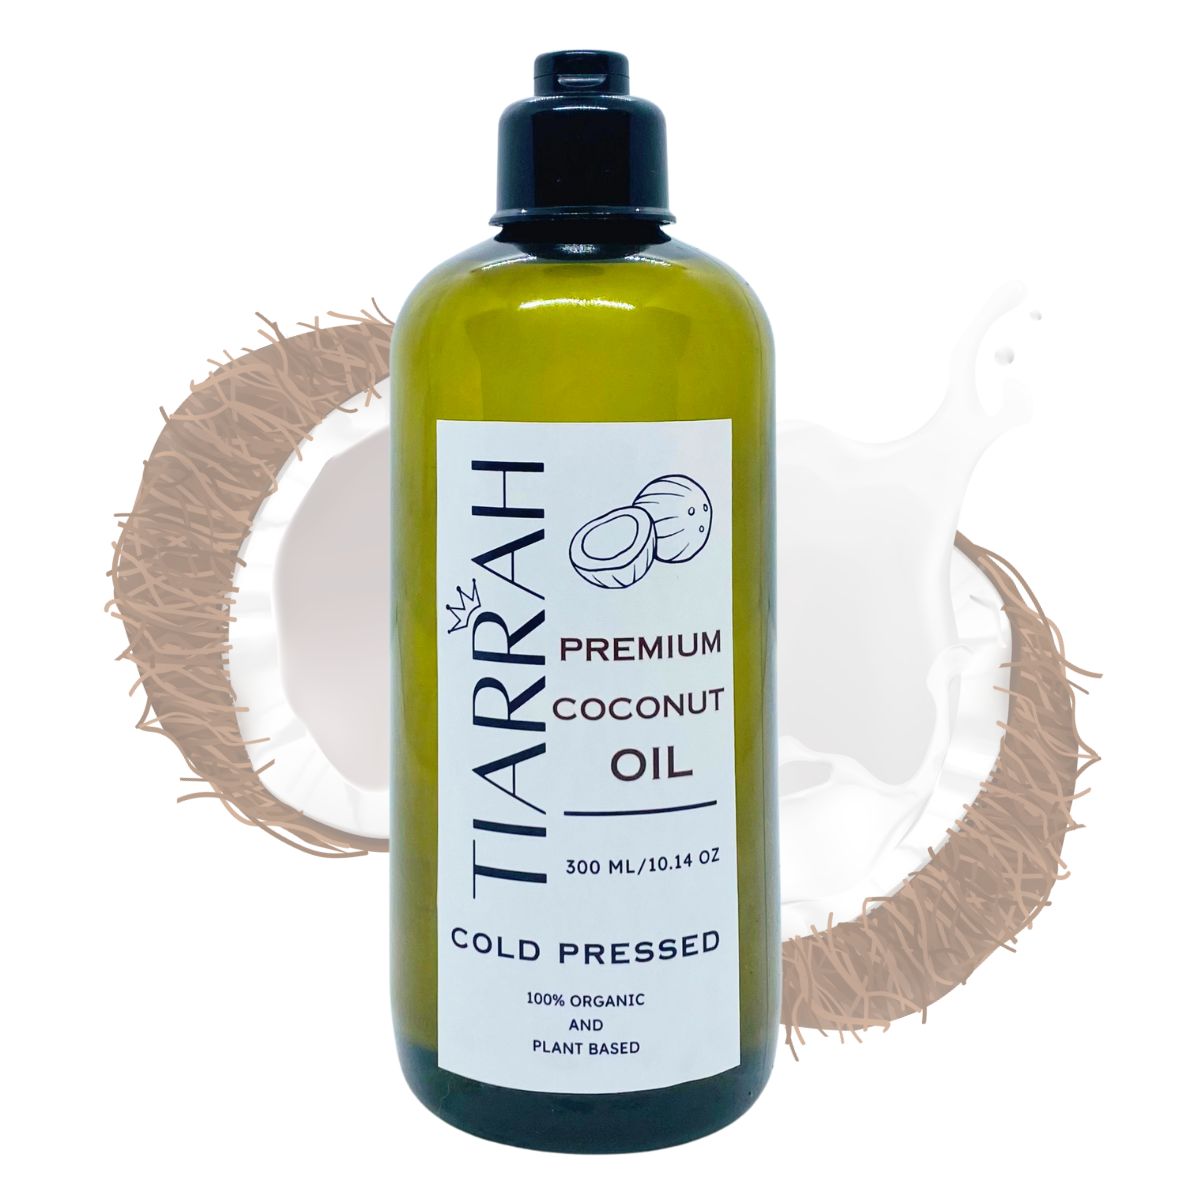 Tiarrah Coconut Oil: Natural, Organic, Non-Toxic - The Luxury Bath and Body Care Shop